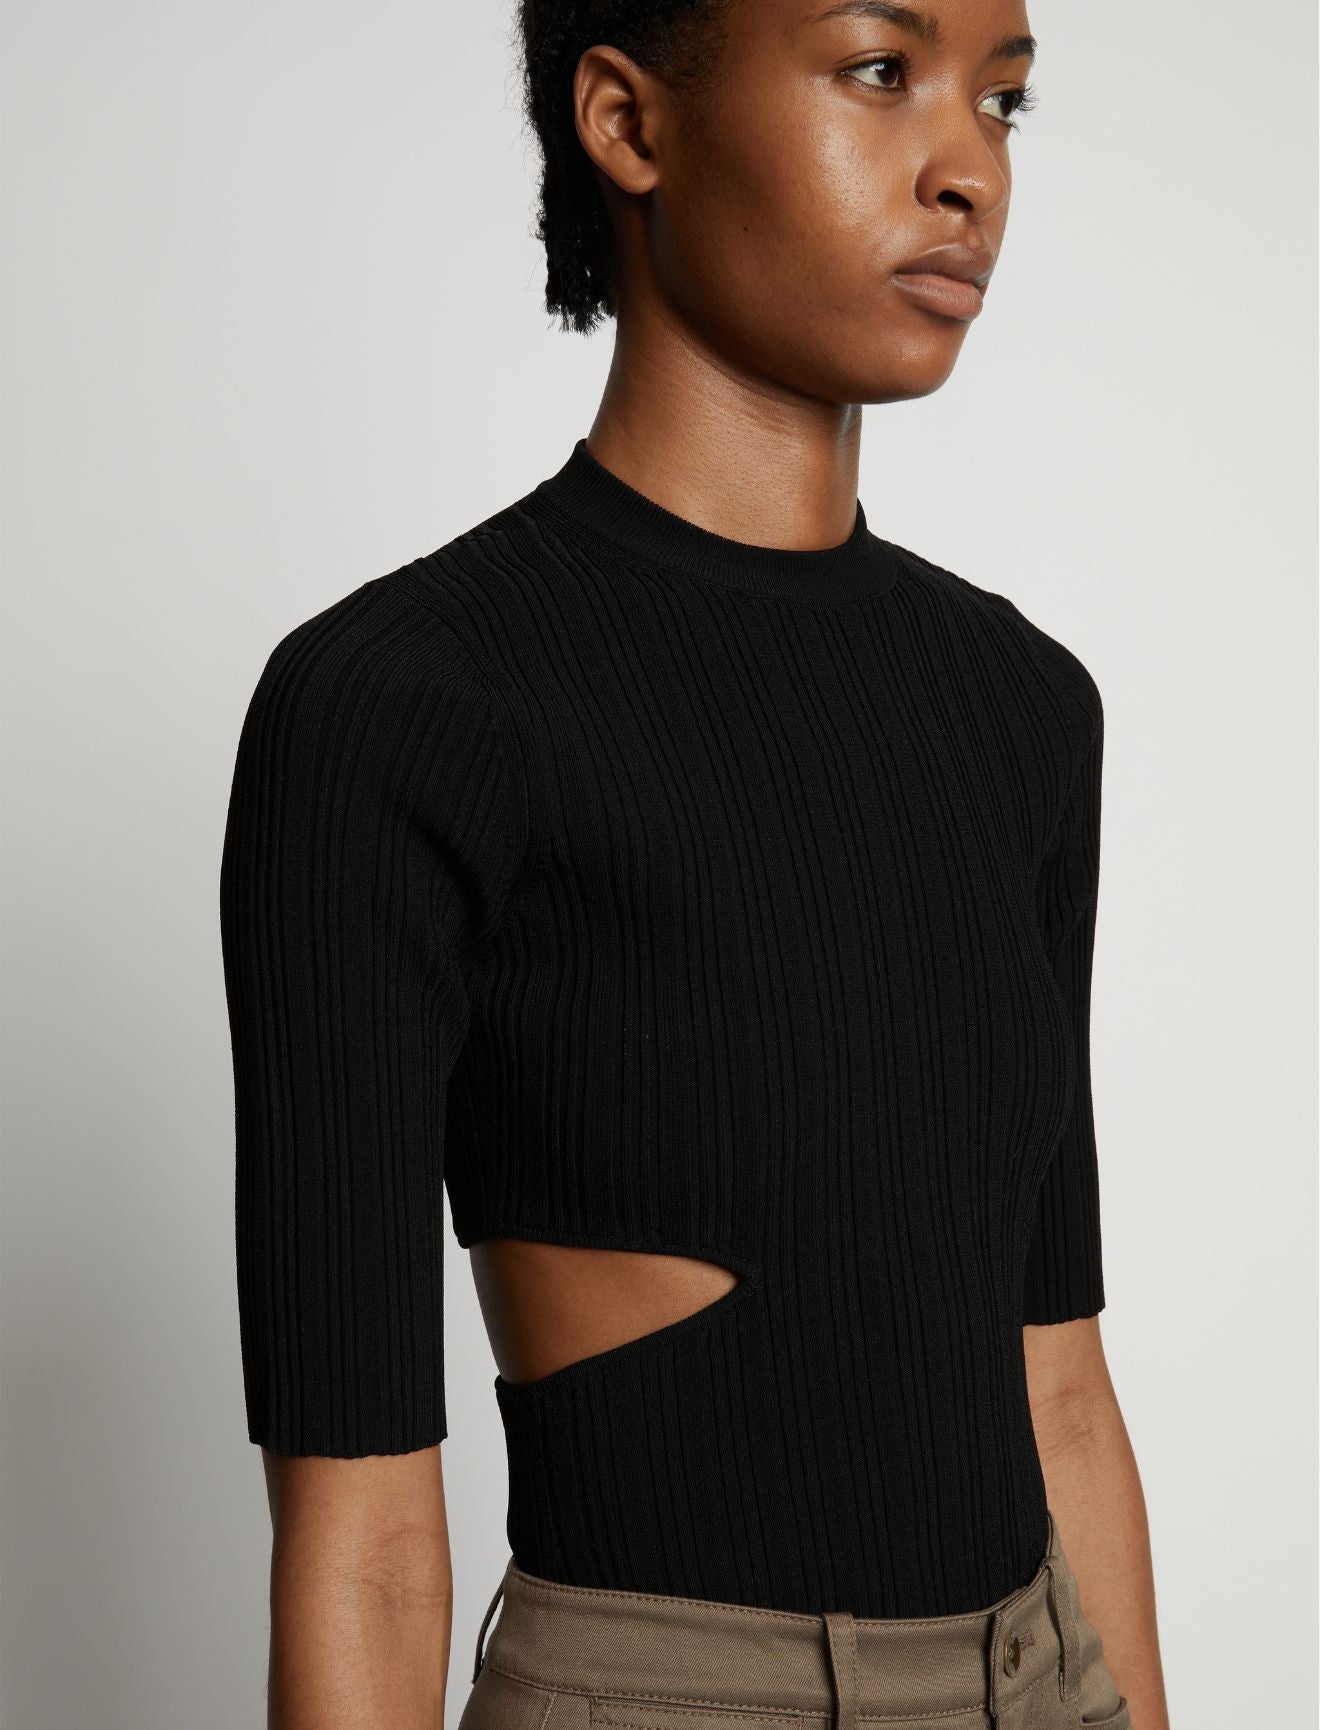 Proenza Schouler White Label | Rib Knit Cut Out Sweater - Black